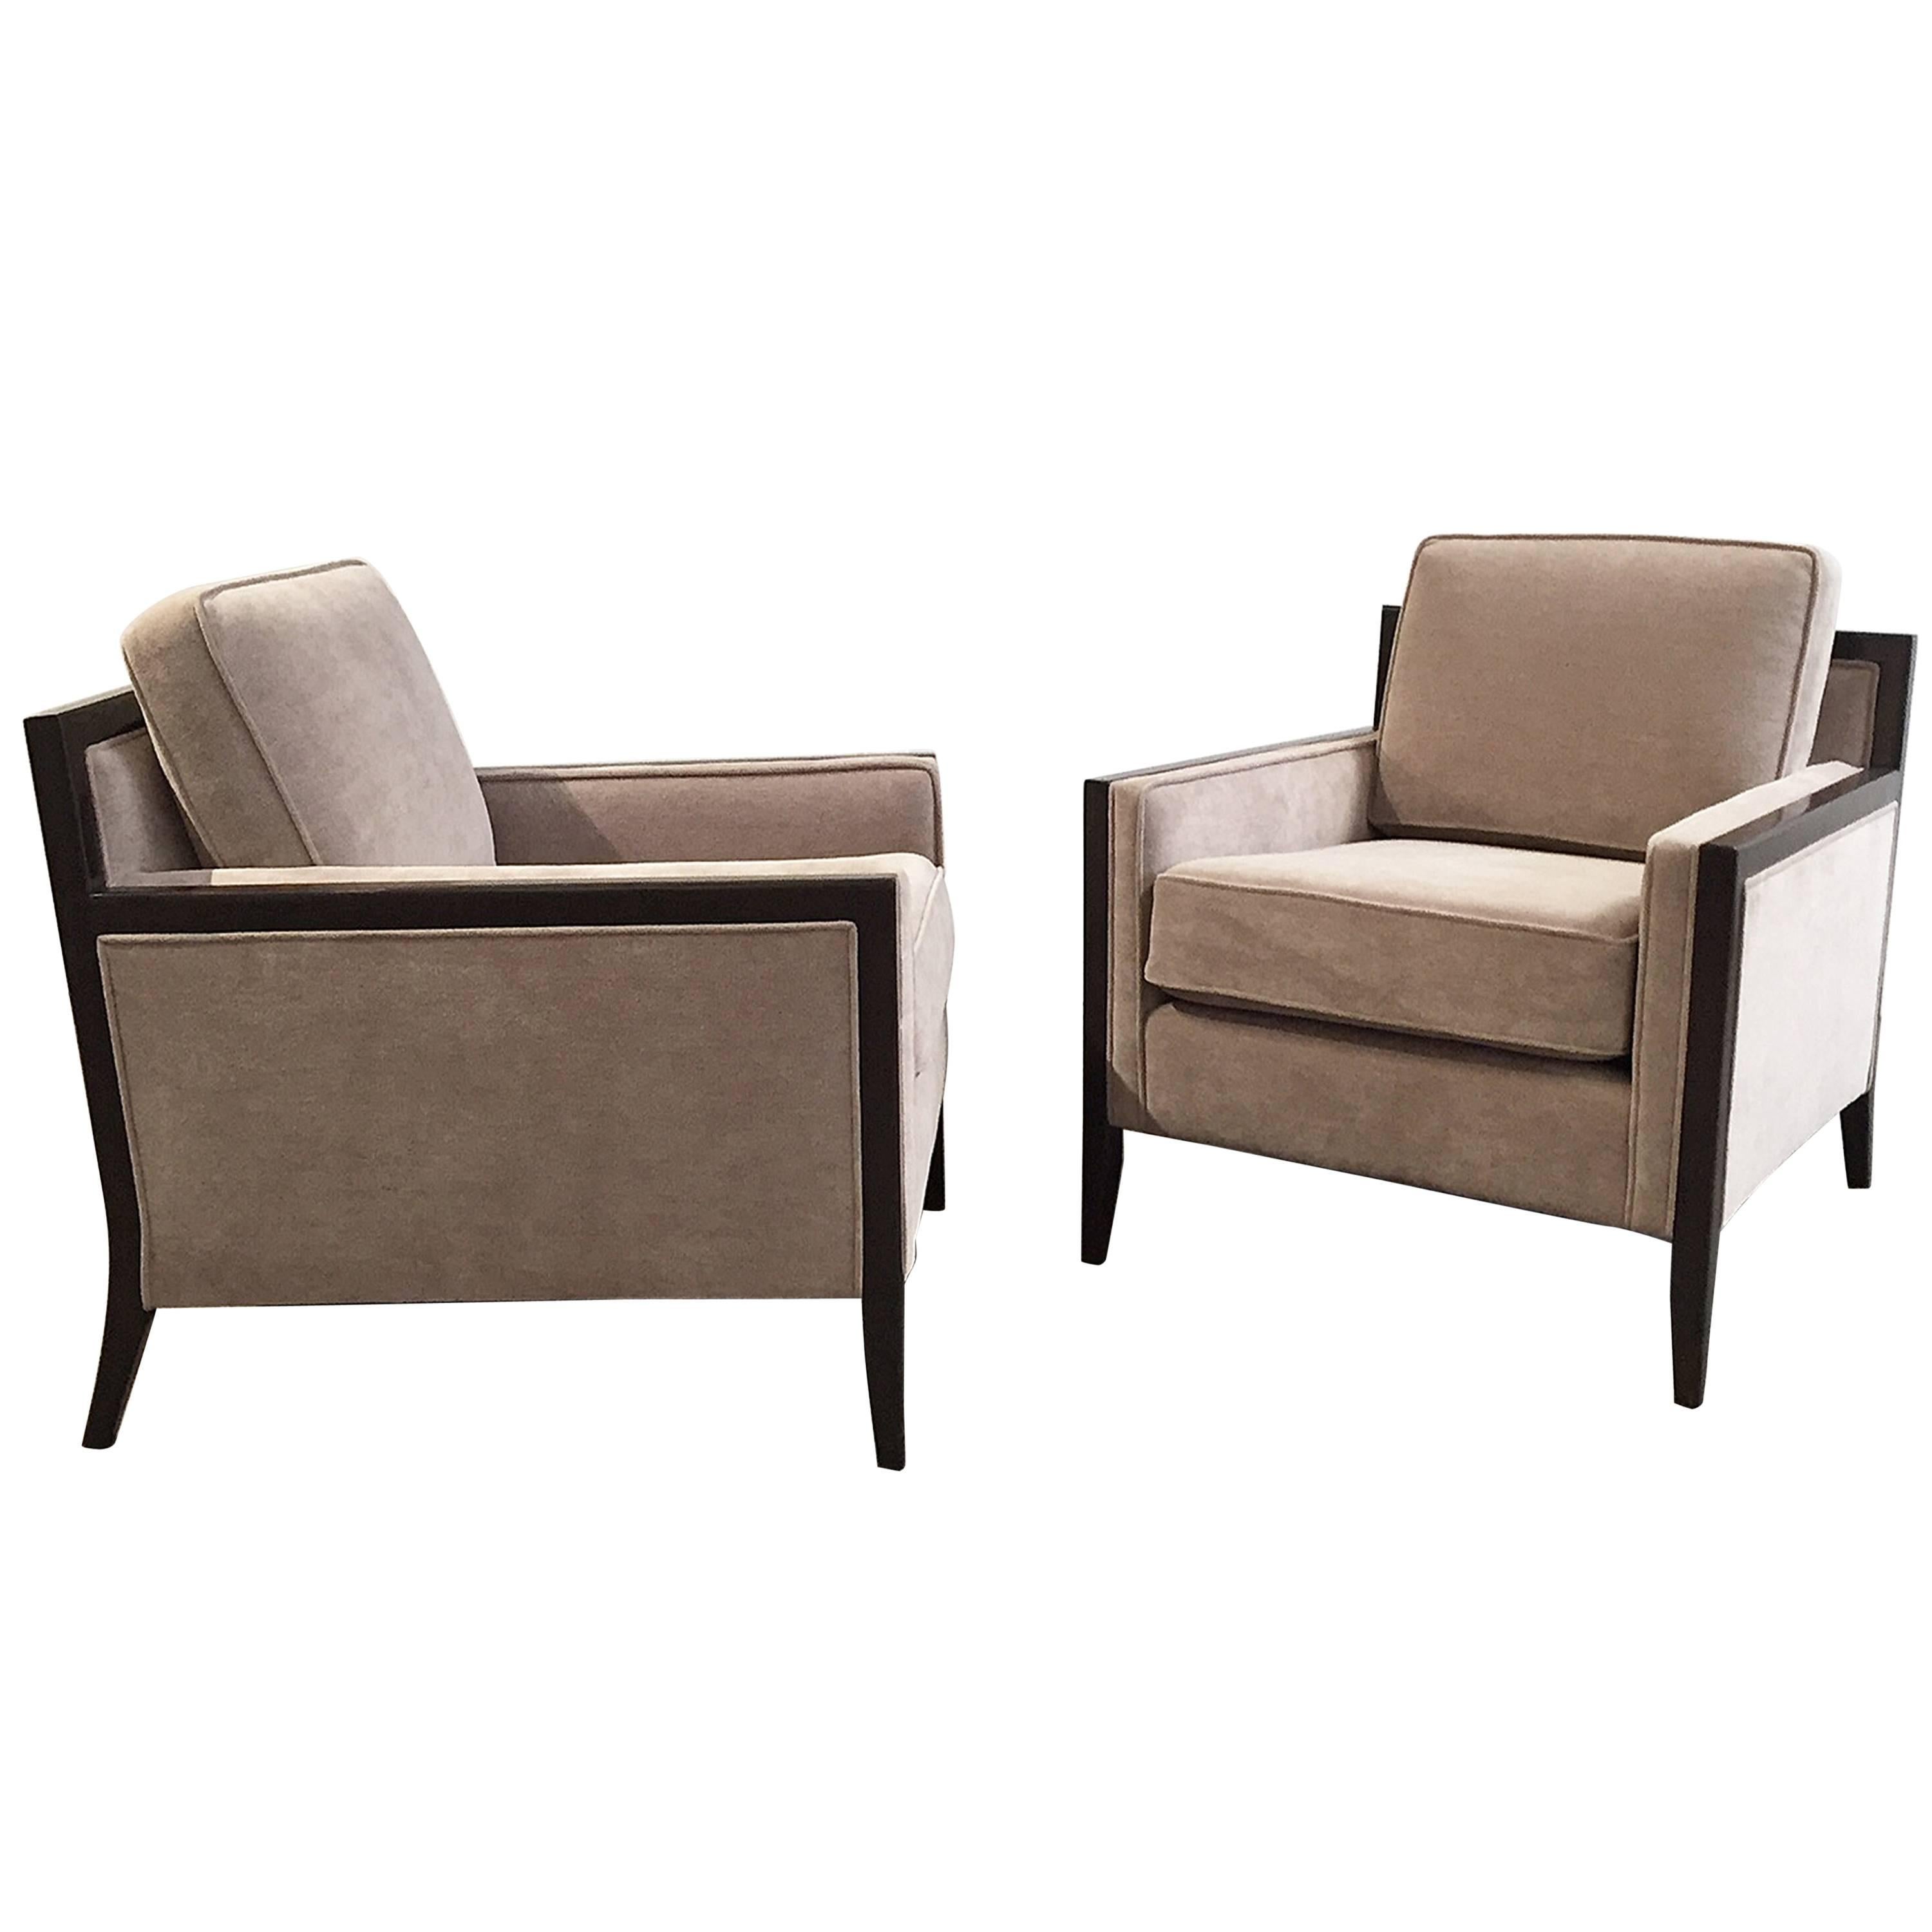 Mid-Century Modern Pair of Chairs